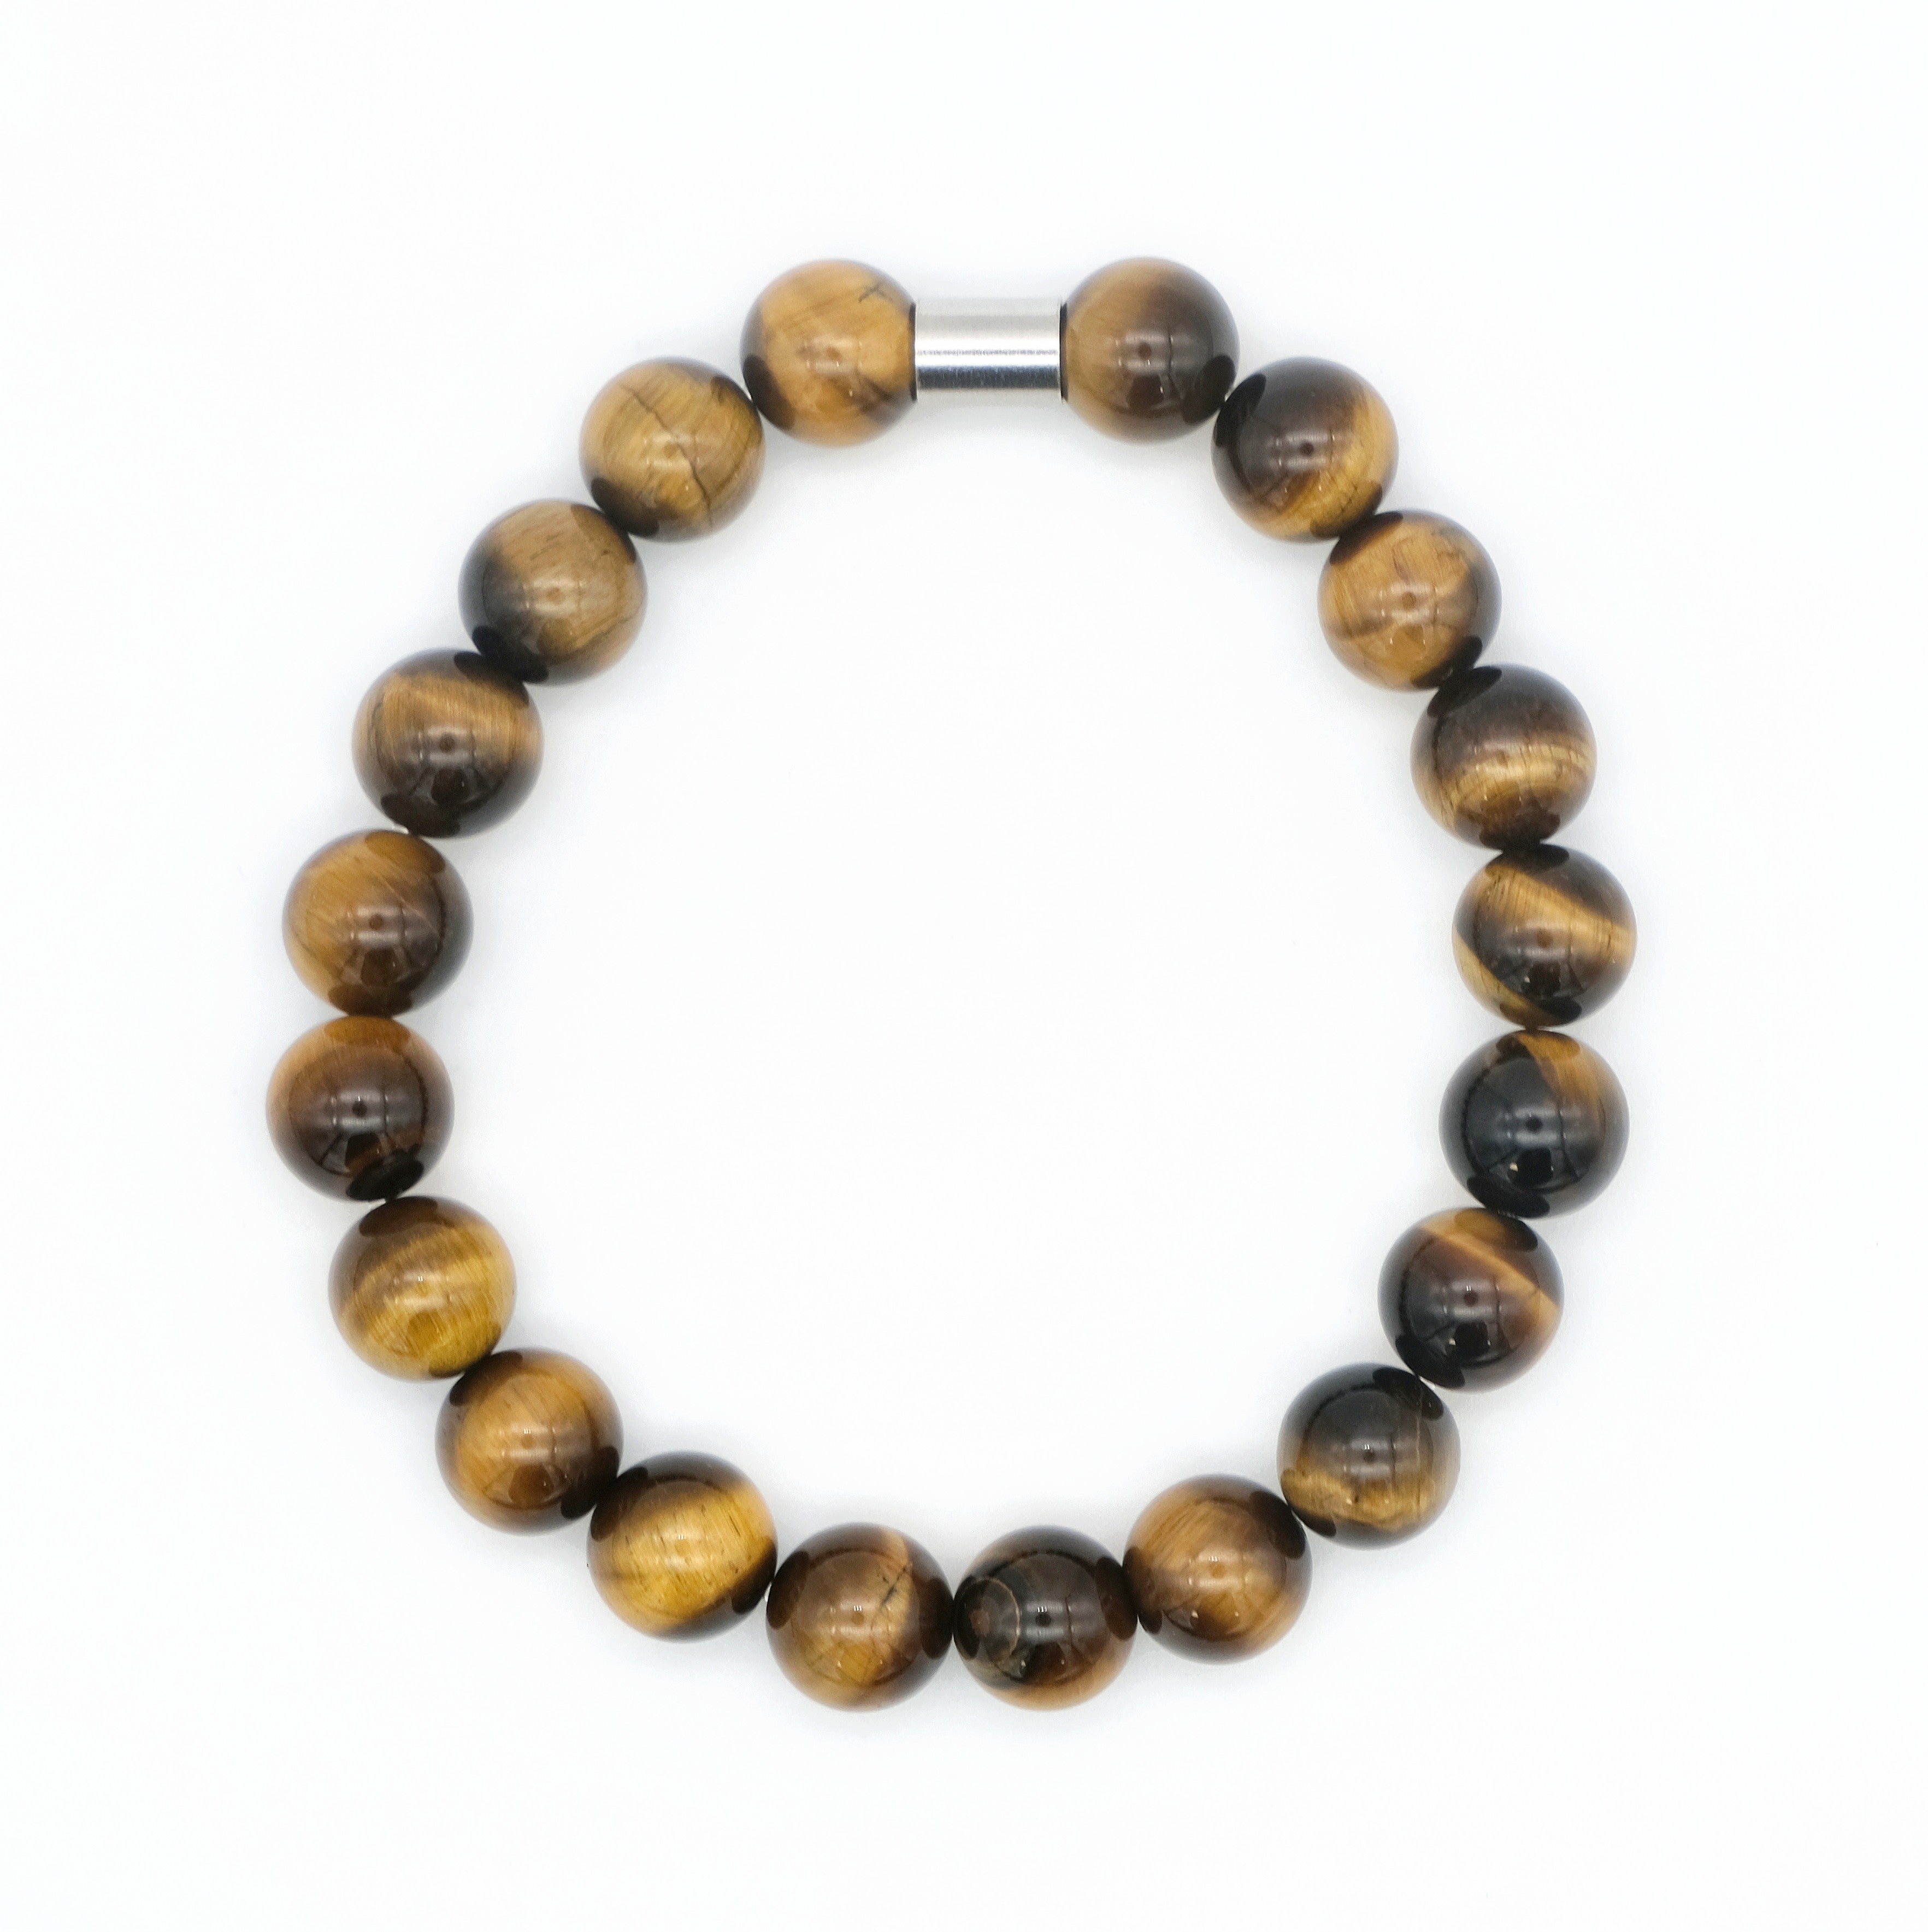 tiger eye gemstone bracelet in 10mm beads from above